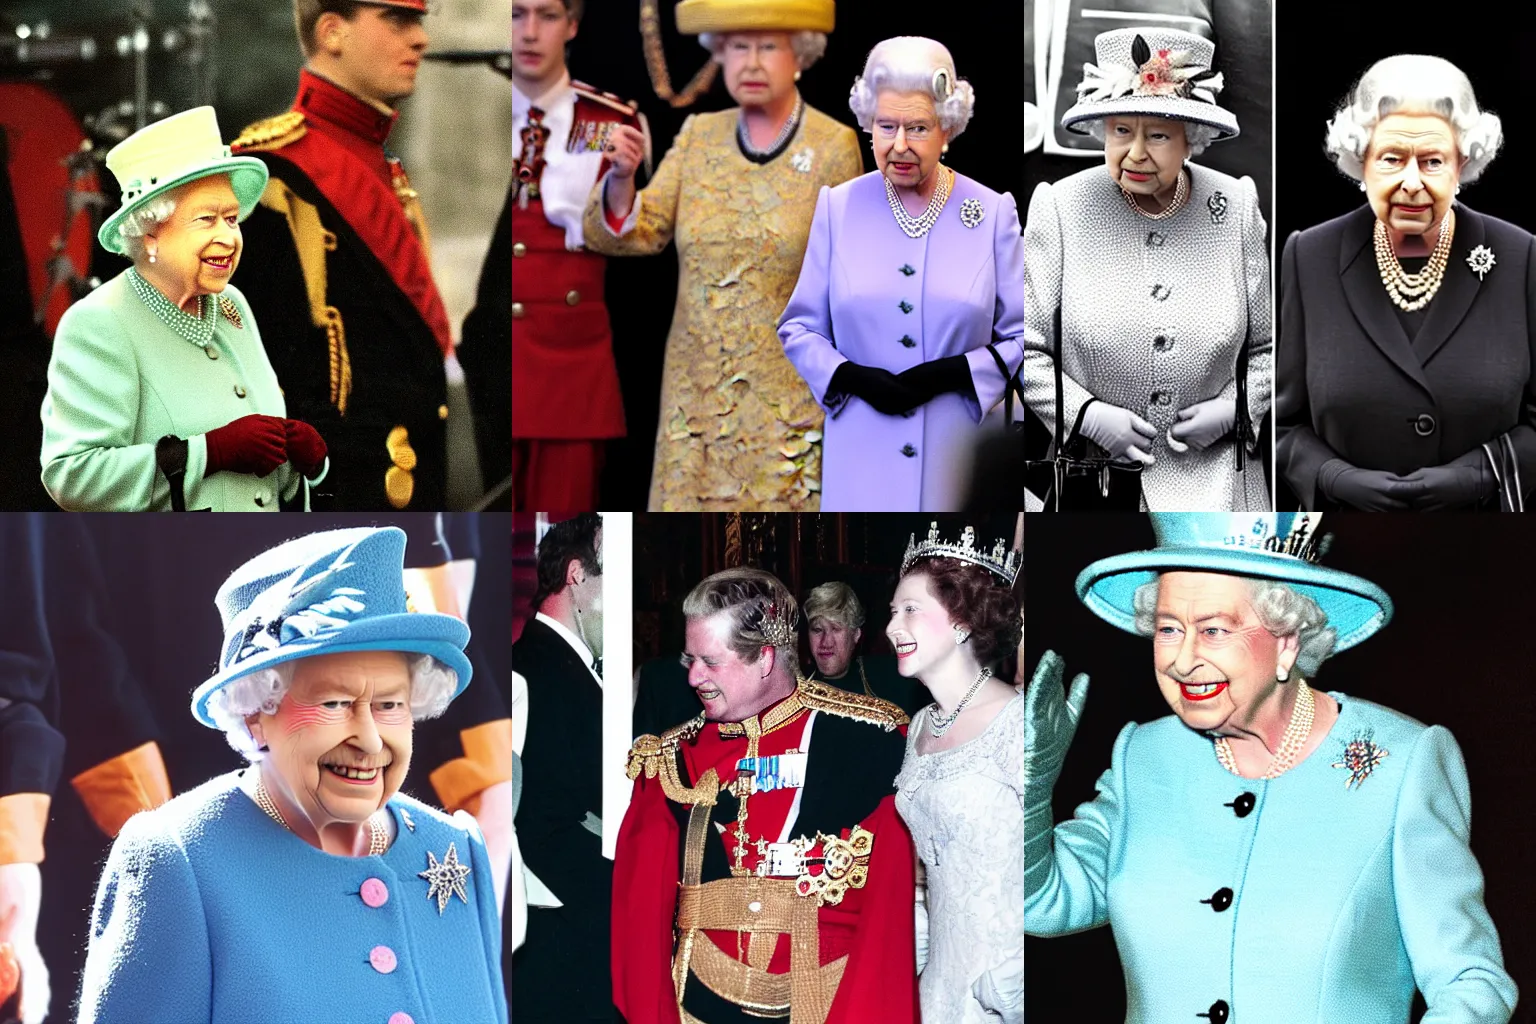 Prompt: Queen Elizabeth II performs at punk rock show